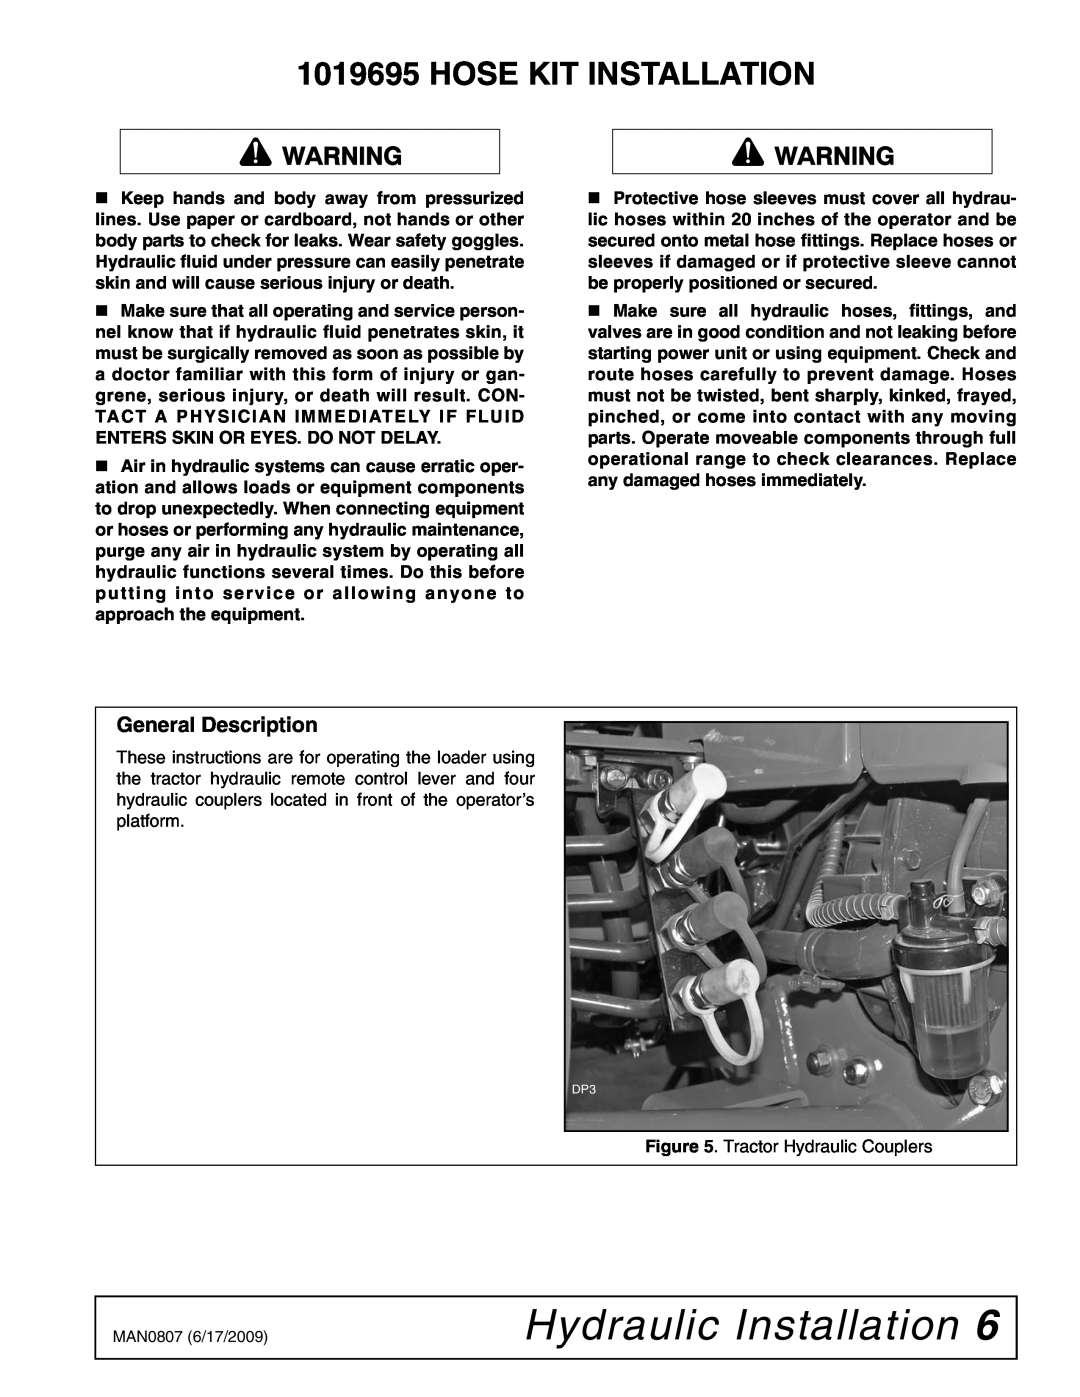 Woods Equipment 2104045 installation manual Hydraulic Installation, Hose Kit Installation, General Description 